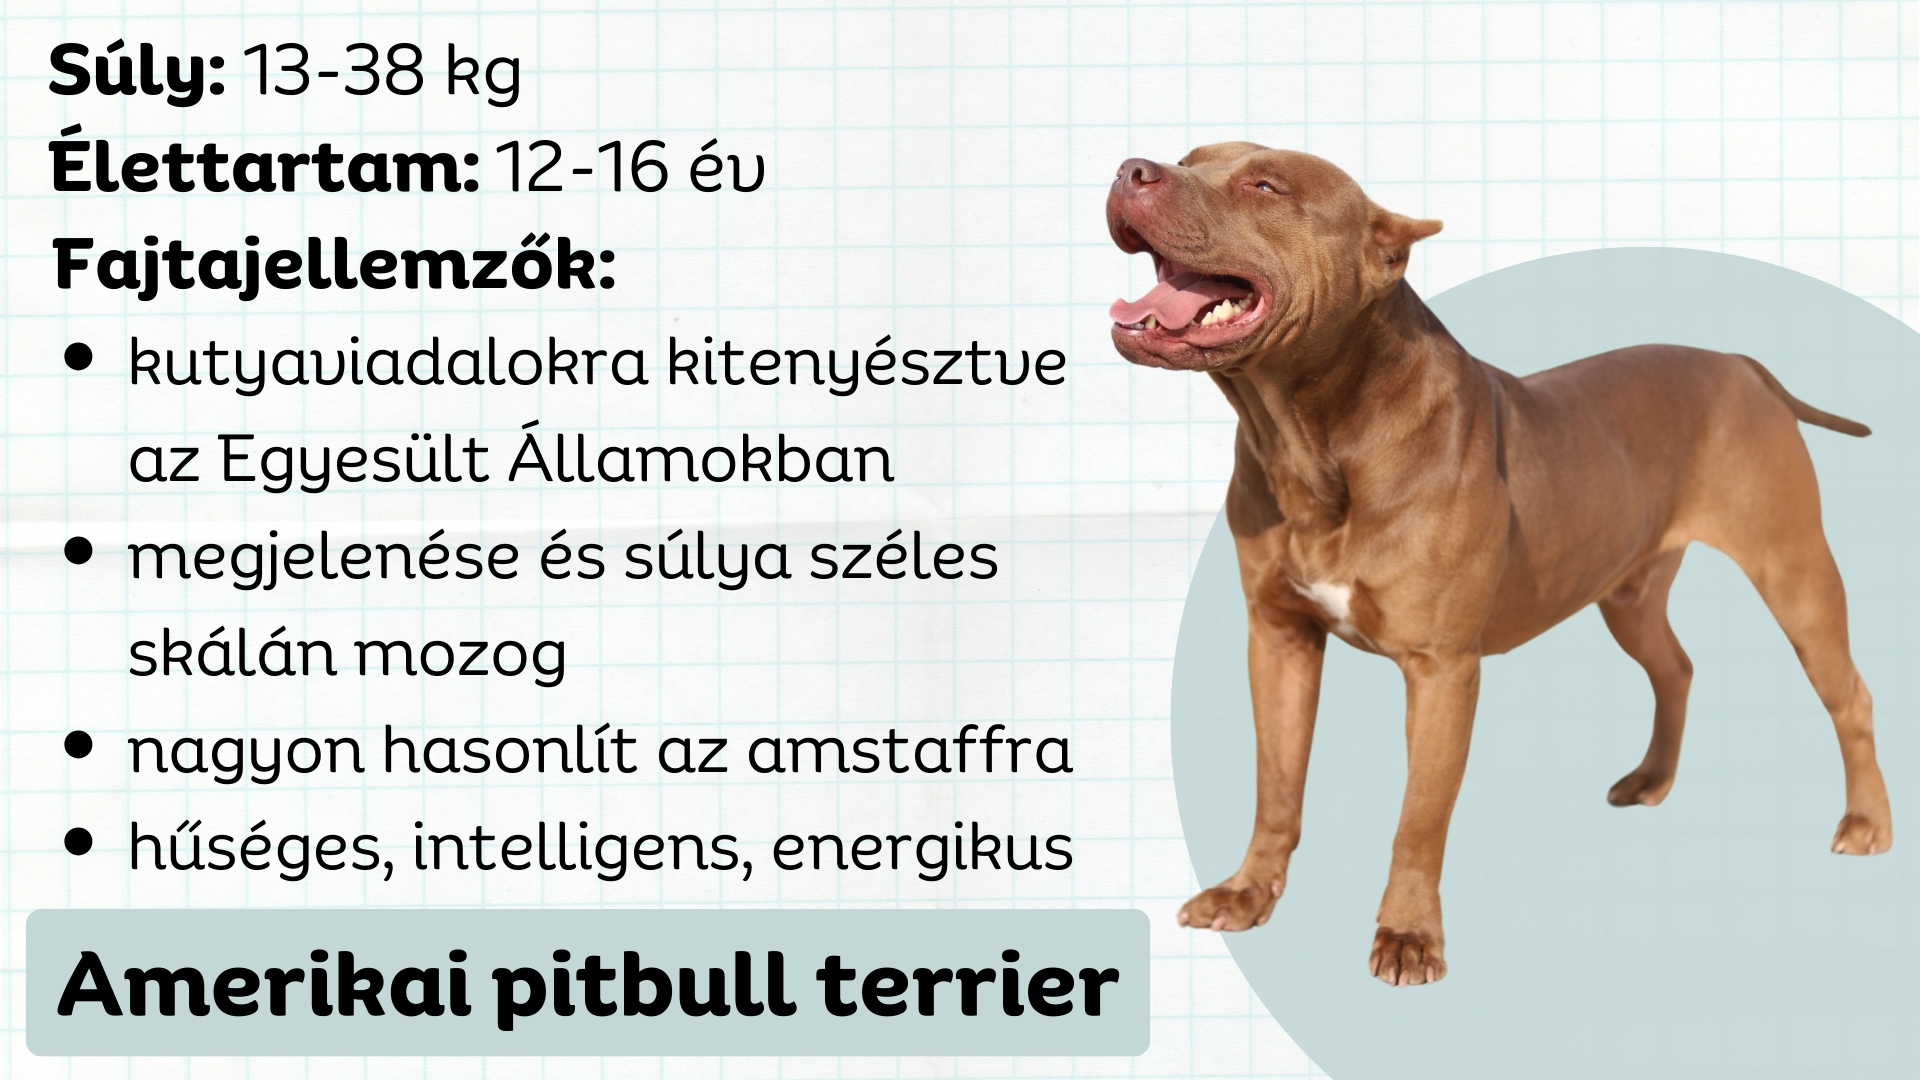 Amerikai pitbull terrier tulajdonságai